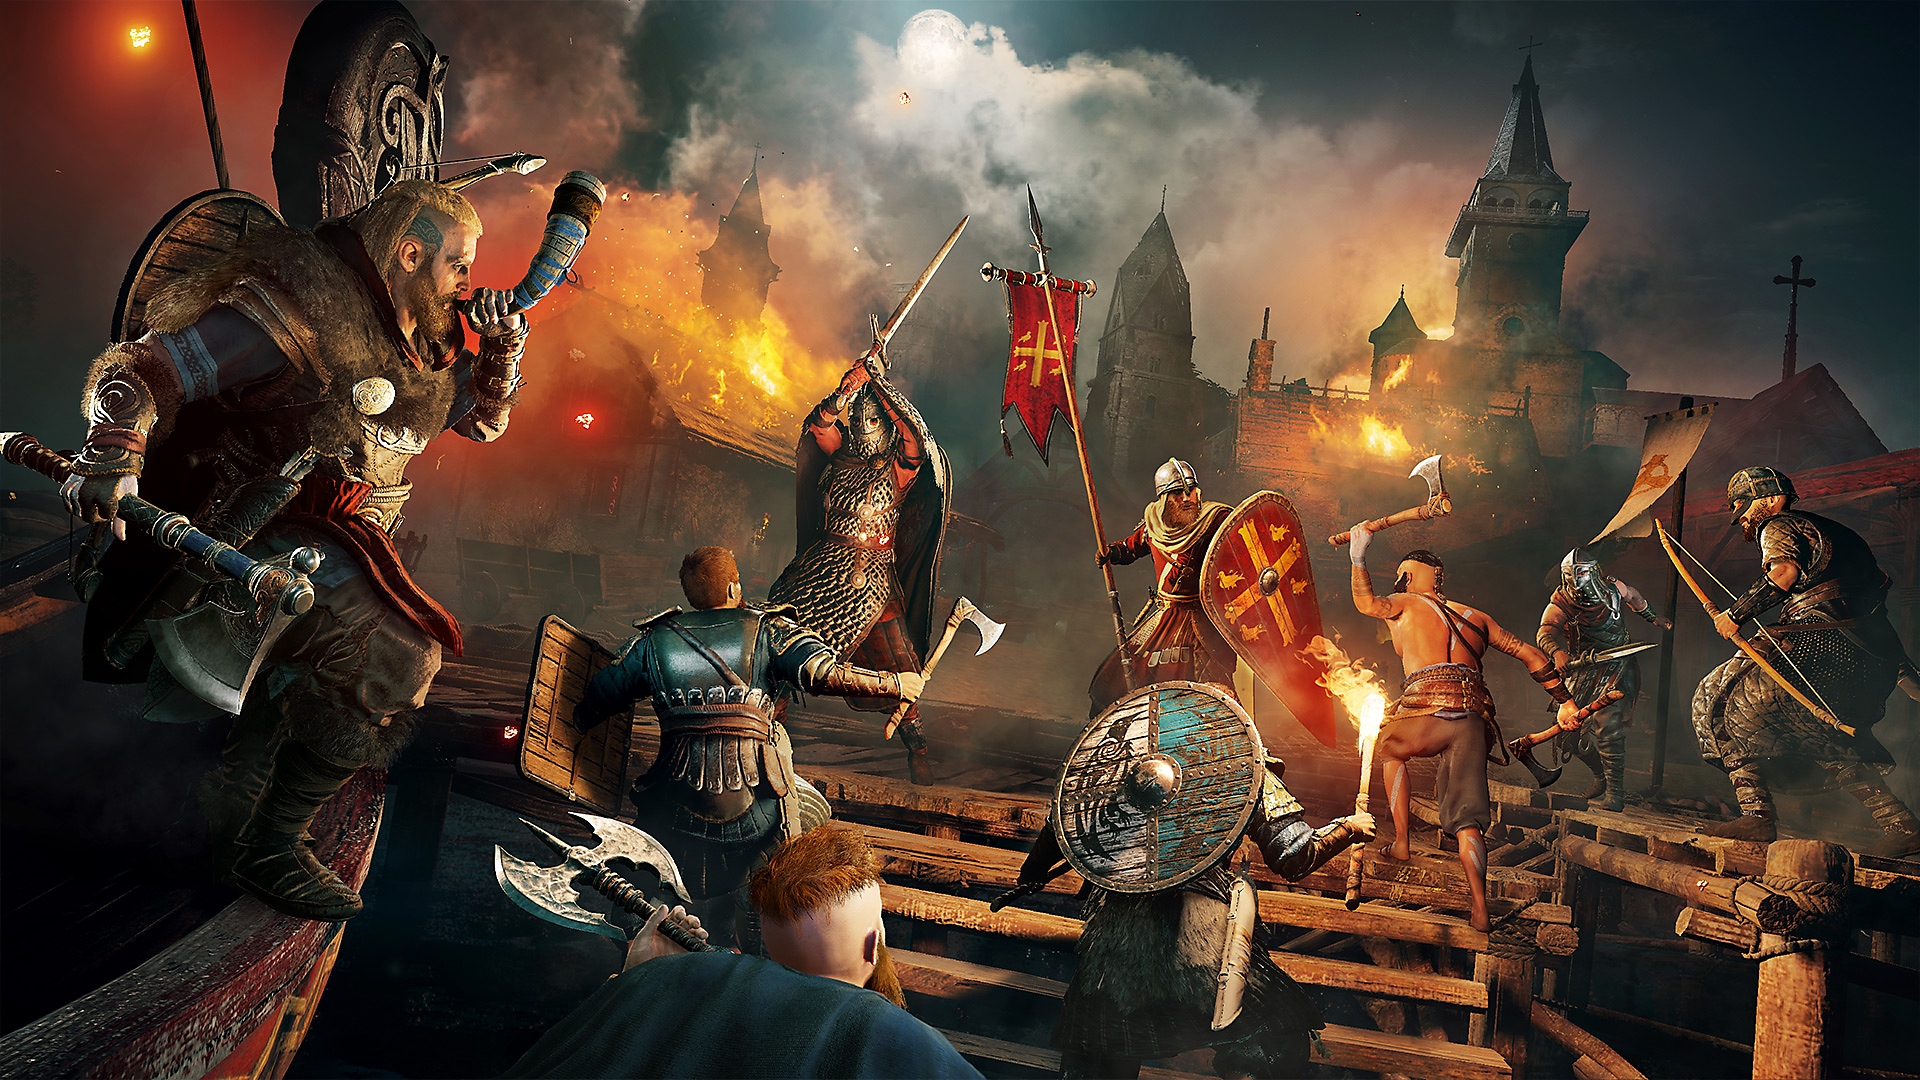 Captura de pantalla de Assassin's Creed Valhalla que muestra a muchos personajes no jugables librando batalla